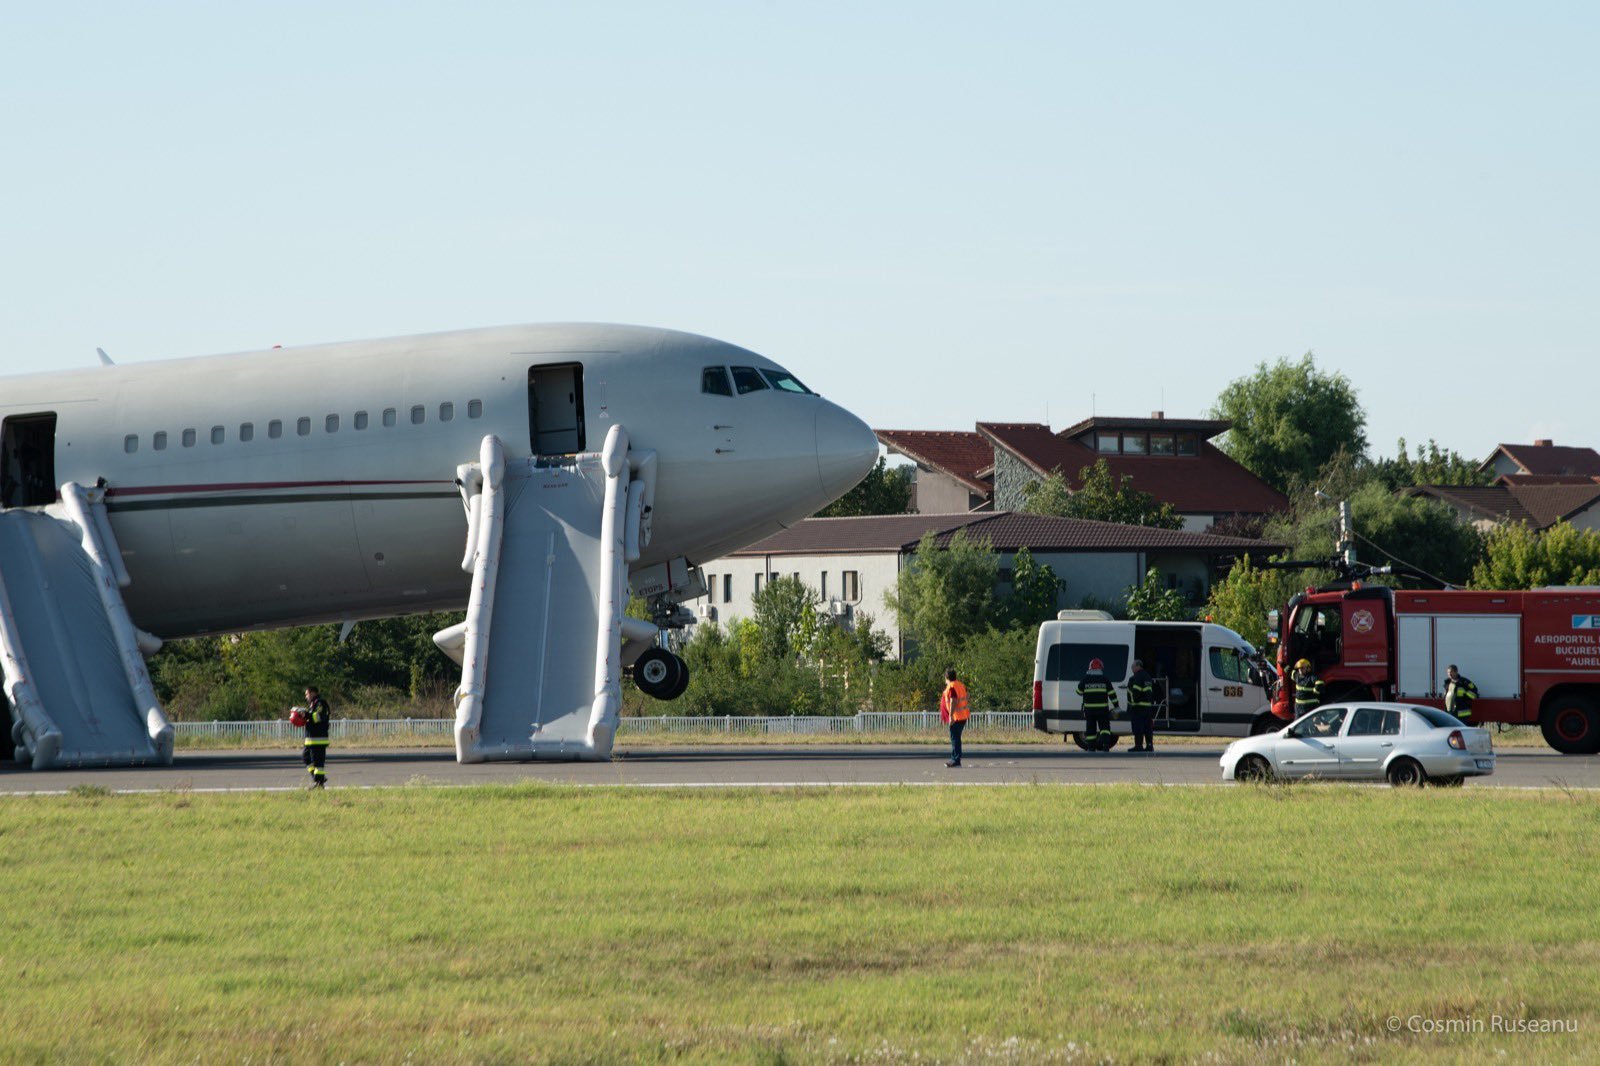 The landing gear of a Boeing 767-300ER broke down - Aviation, Boeing, Boeing 767, Incident, Chassis, Romania, Bucharest, Emergency landing, Video, Longpost